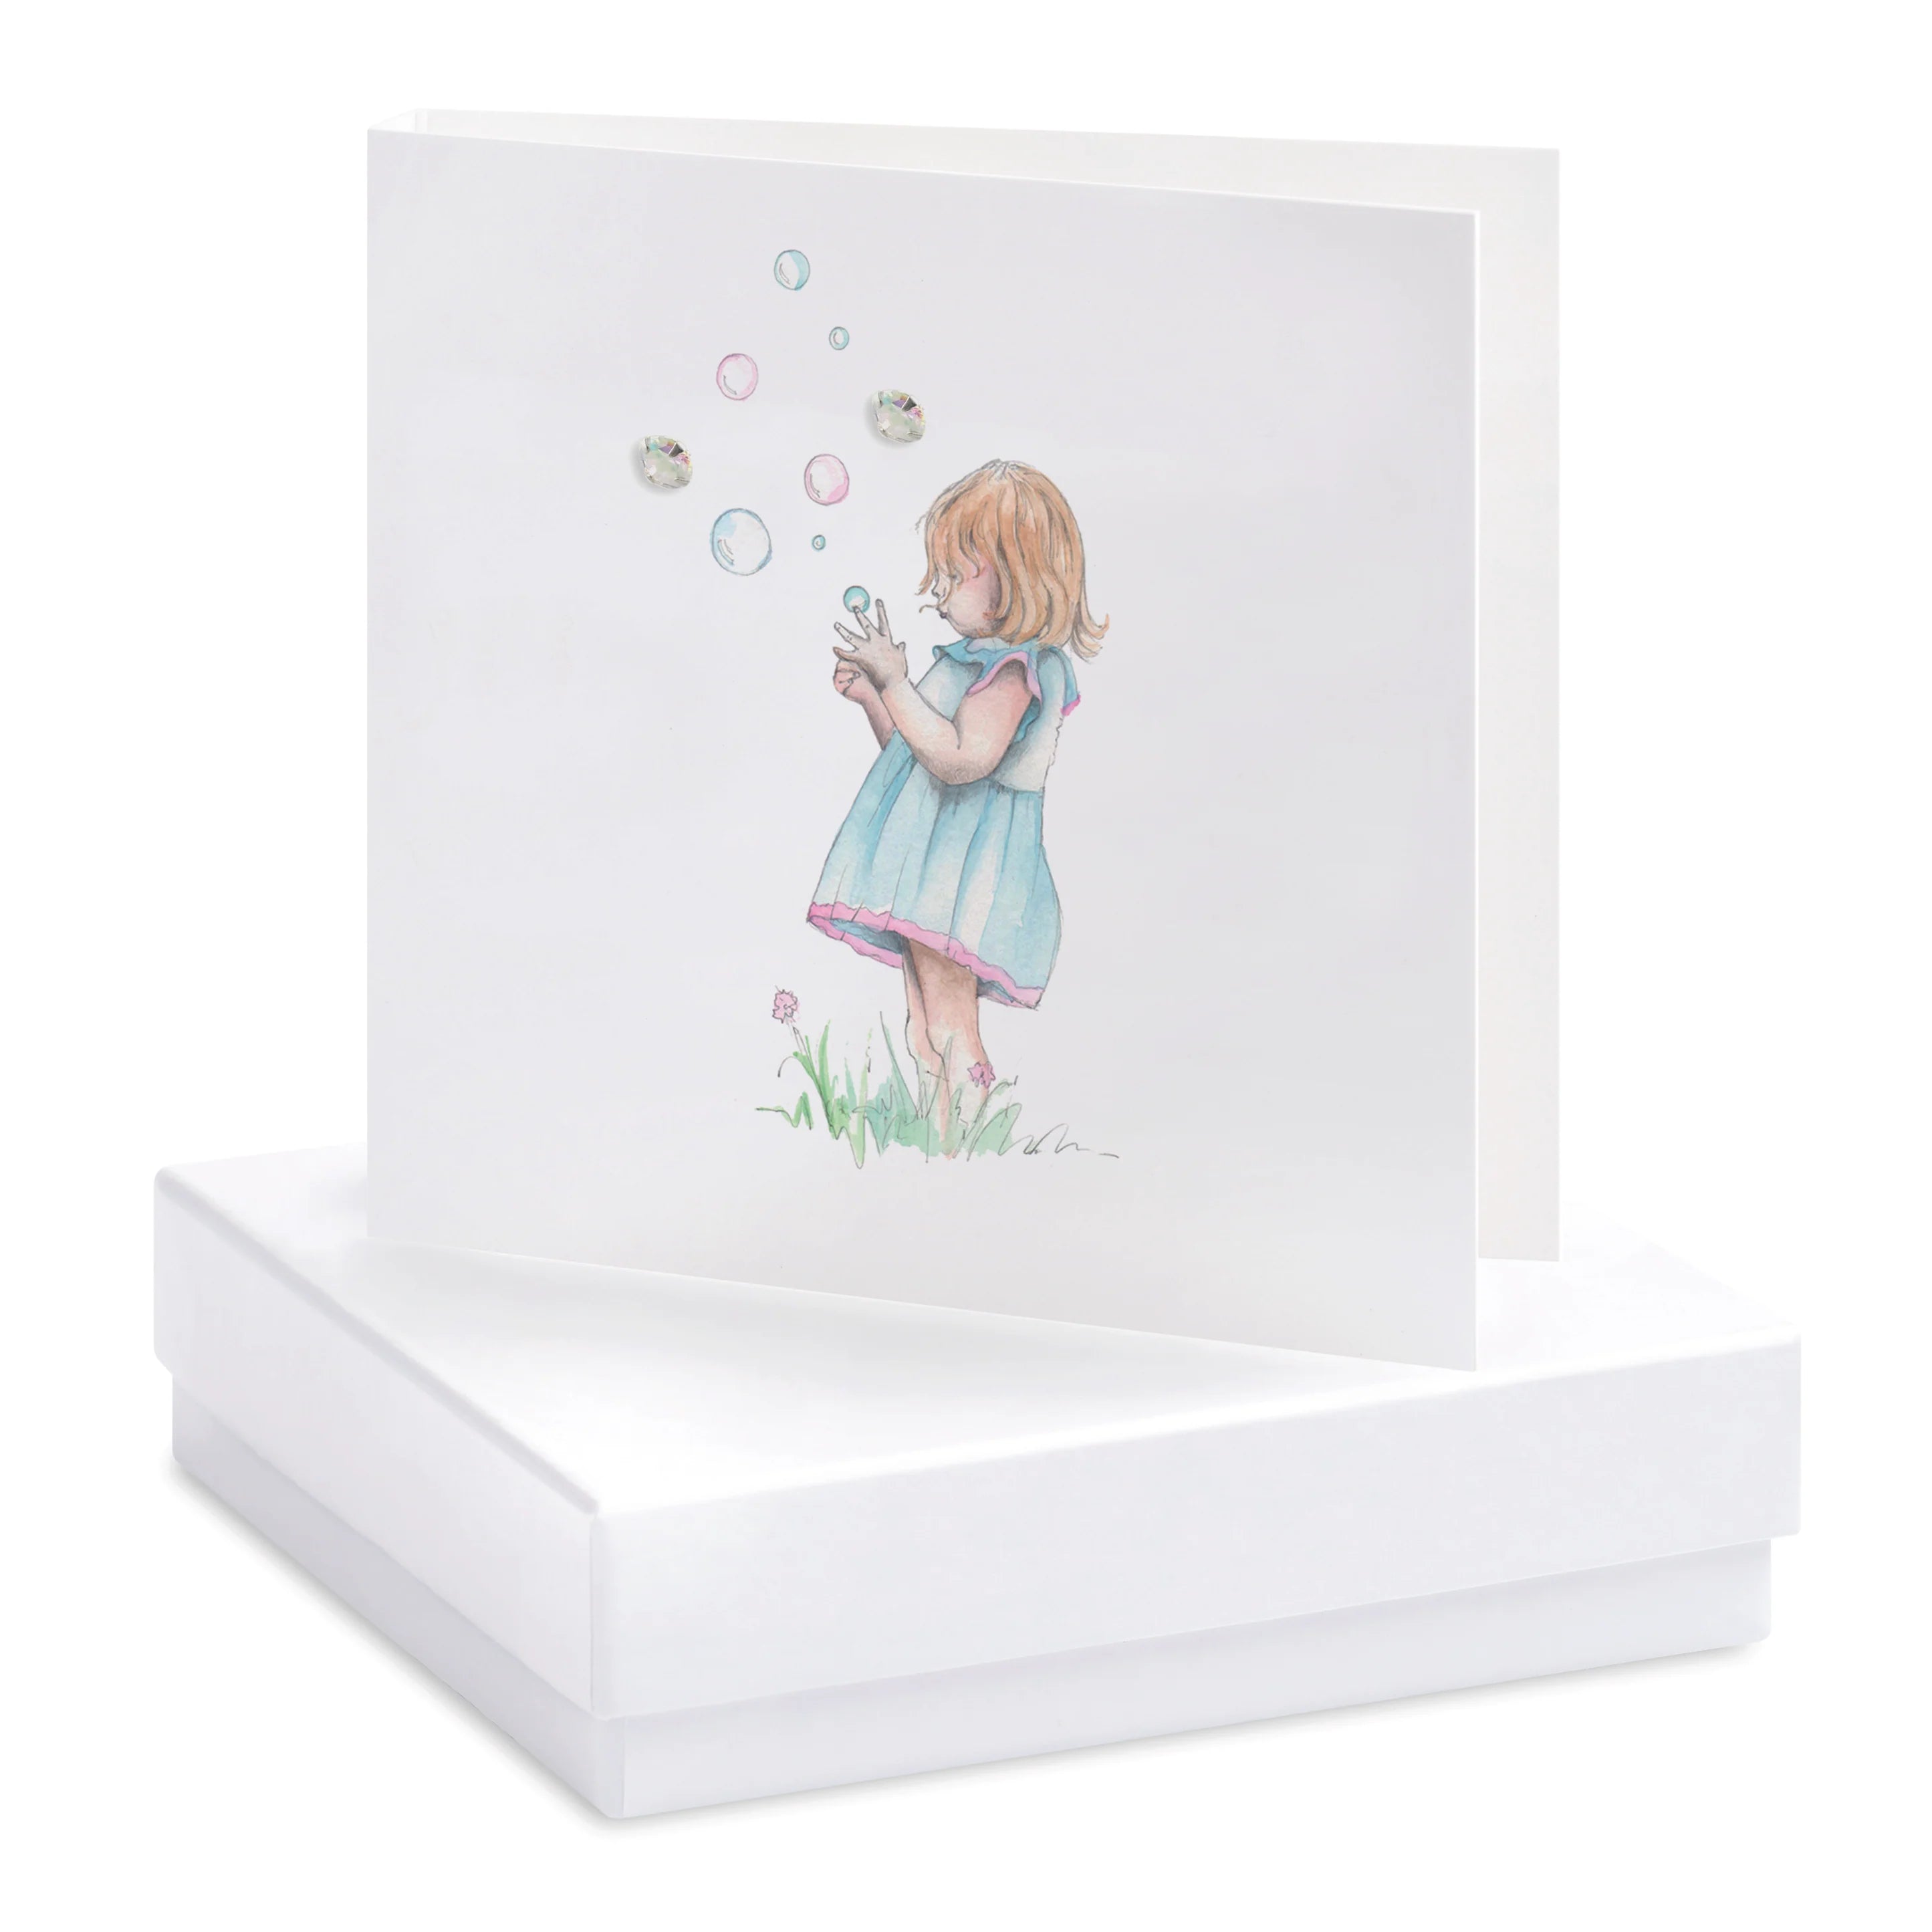 Fabulous Gifts Crumble & Core Box Bubble Girl Earring Card  by Weirs of Baggot Street